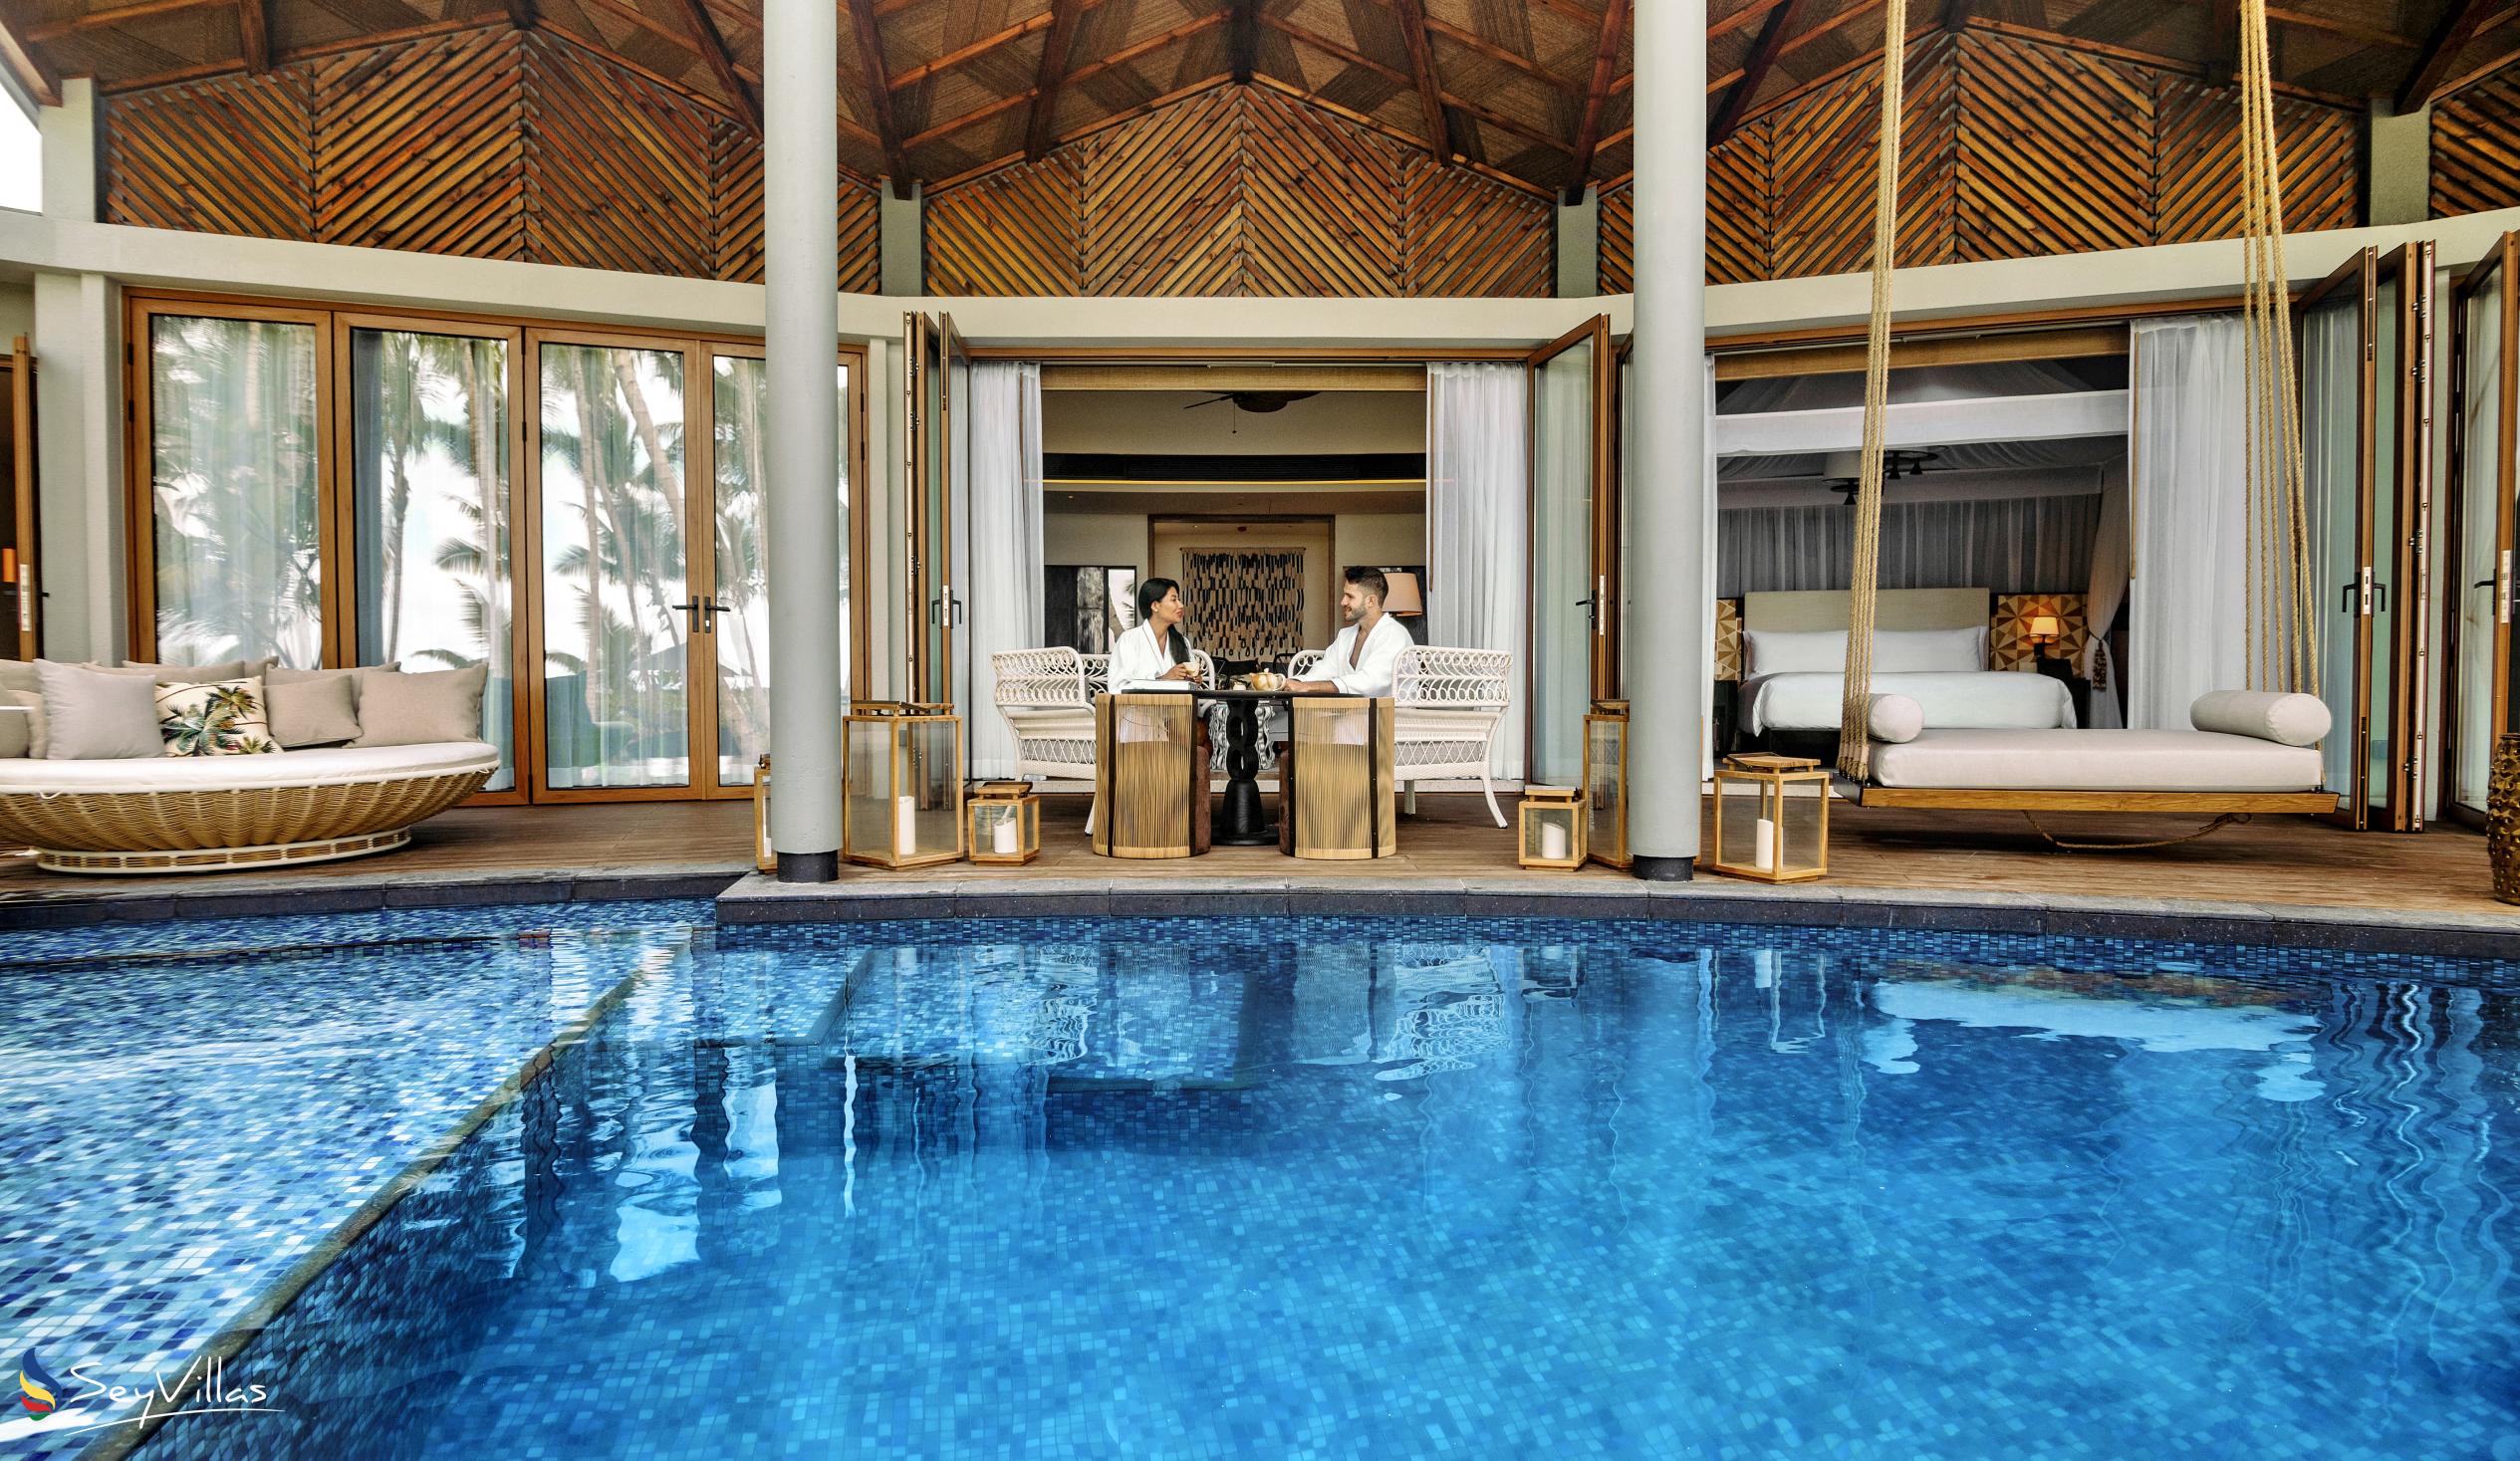 Photo 52: Waldorf Astoria Seychelles Platte Island - Grand Hawksbill Pool Villa - Platte Island (Seychelles)